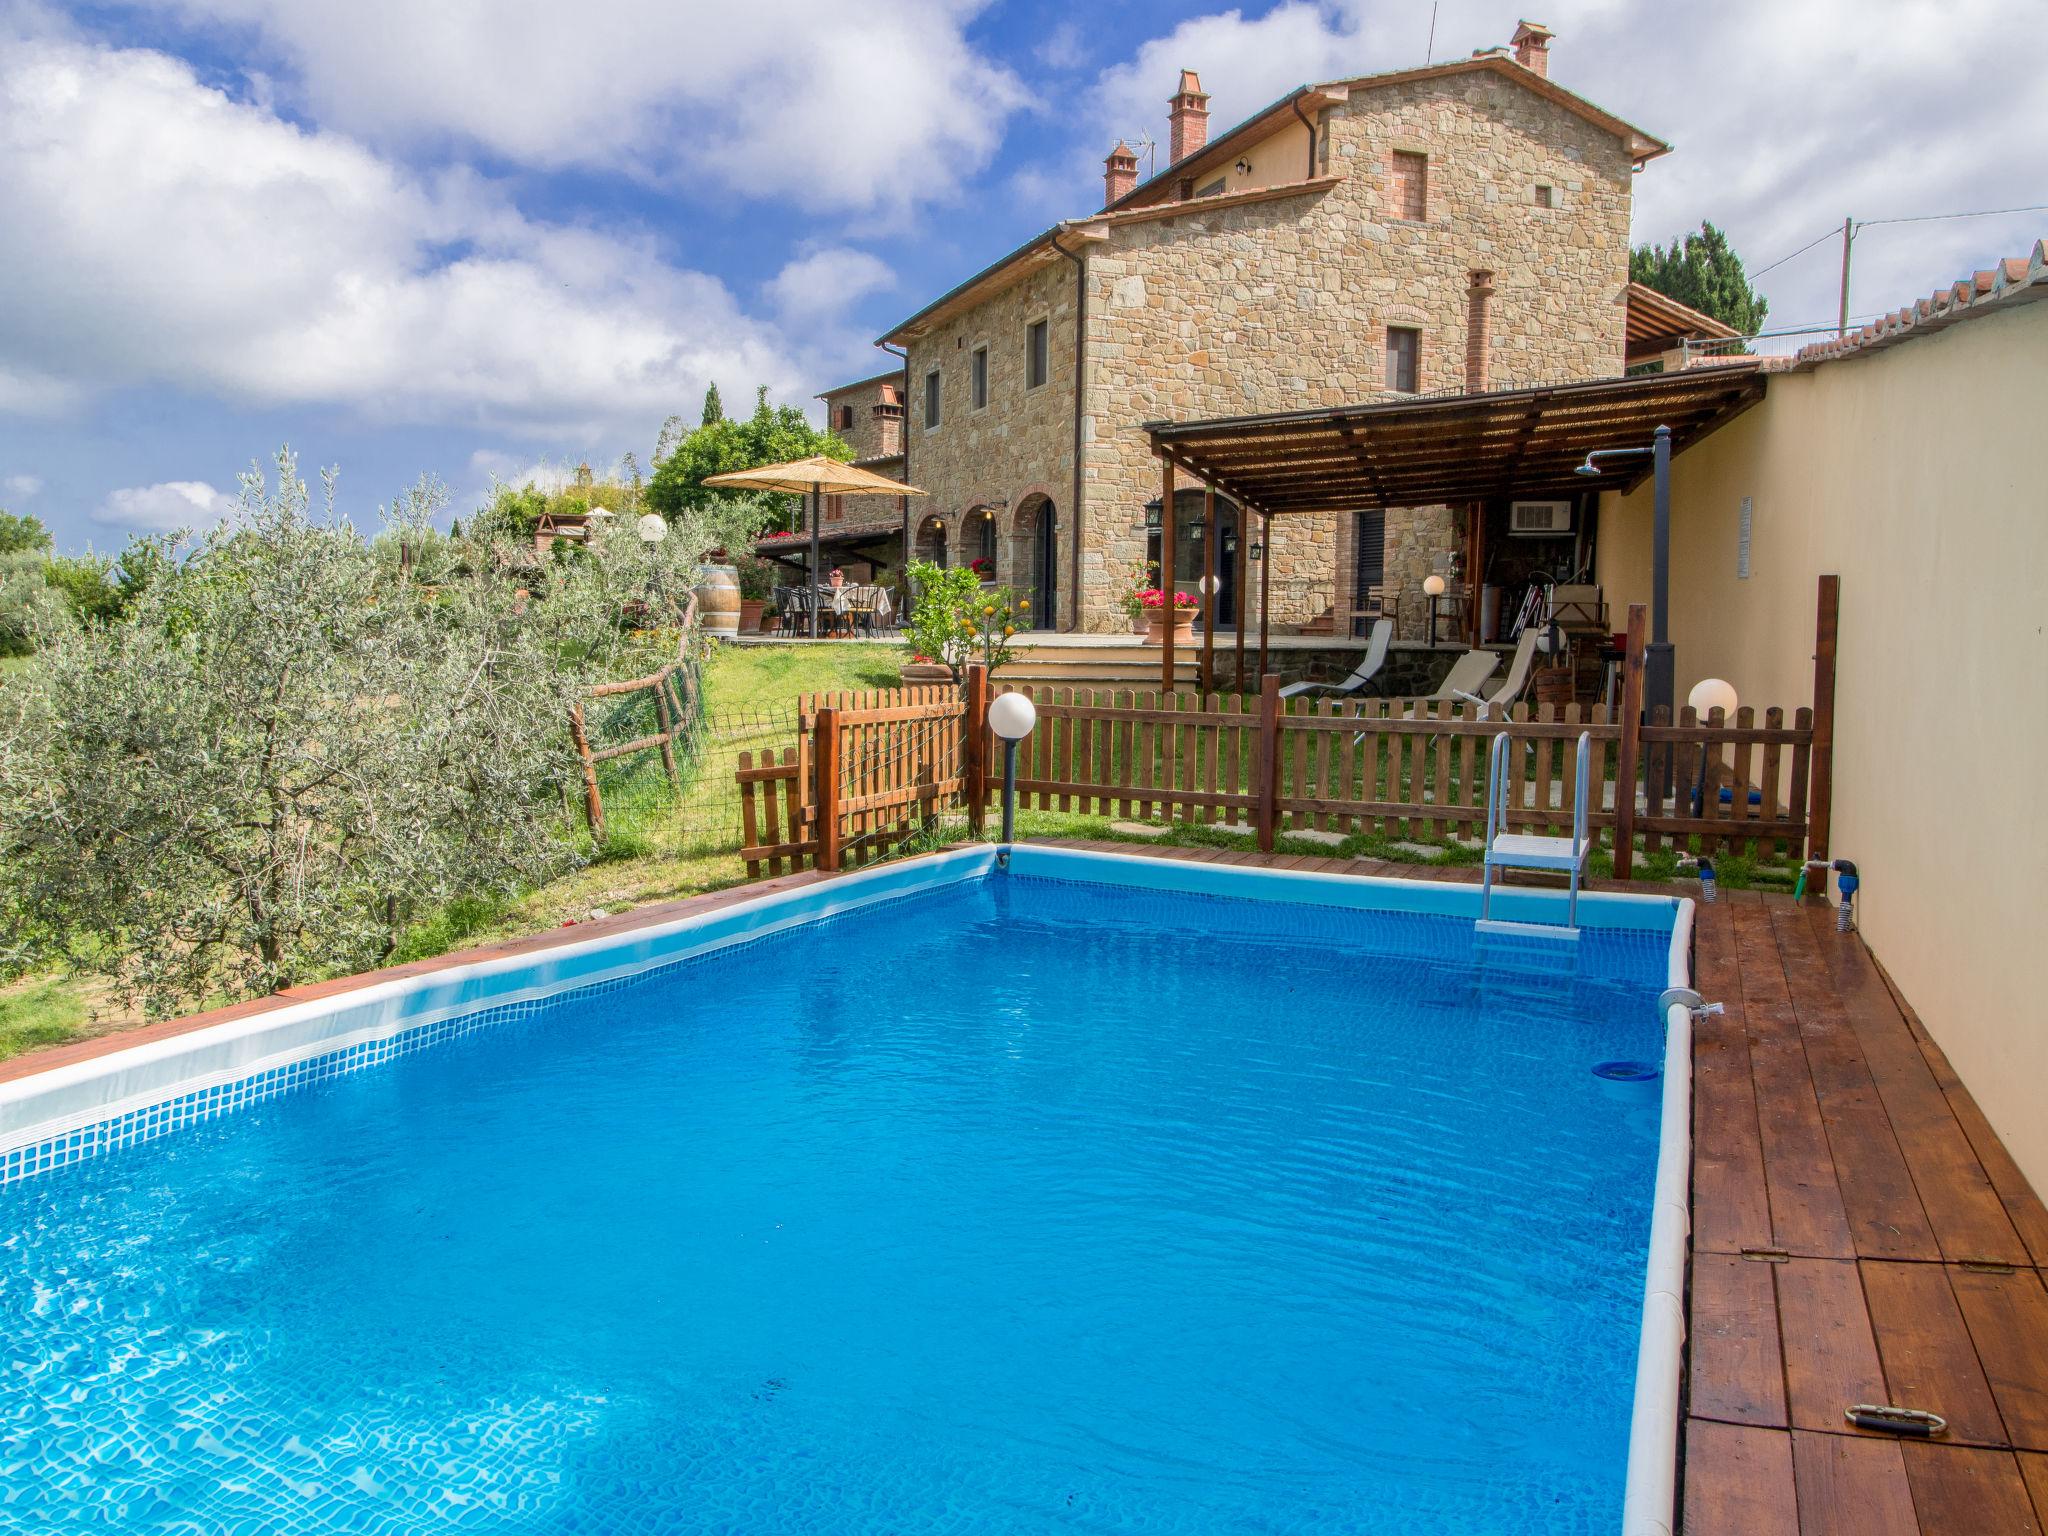 Foto 1 - Haus mit 5 Schlafzimmern in Civitella in Val di Chiana mit privater pool und terrasse